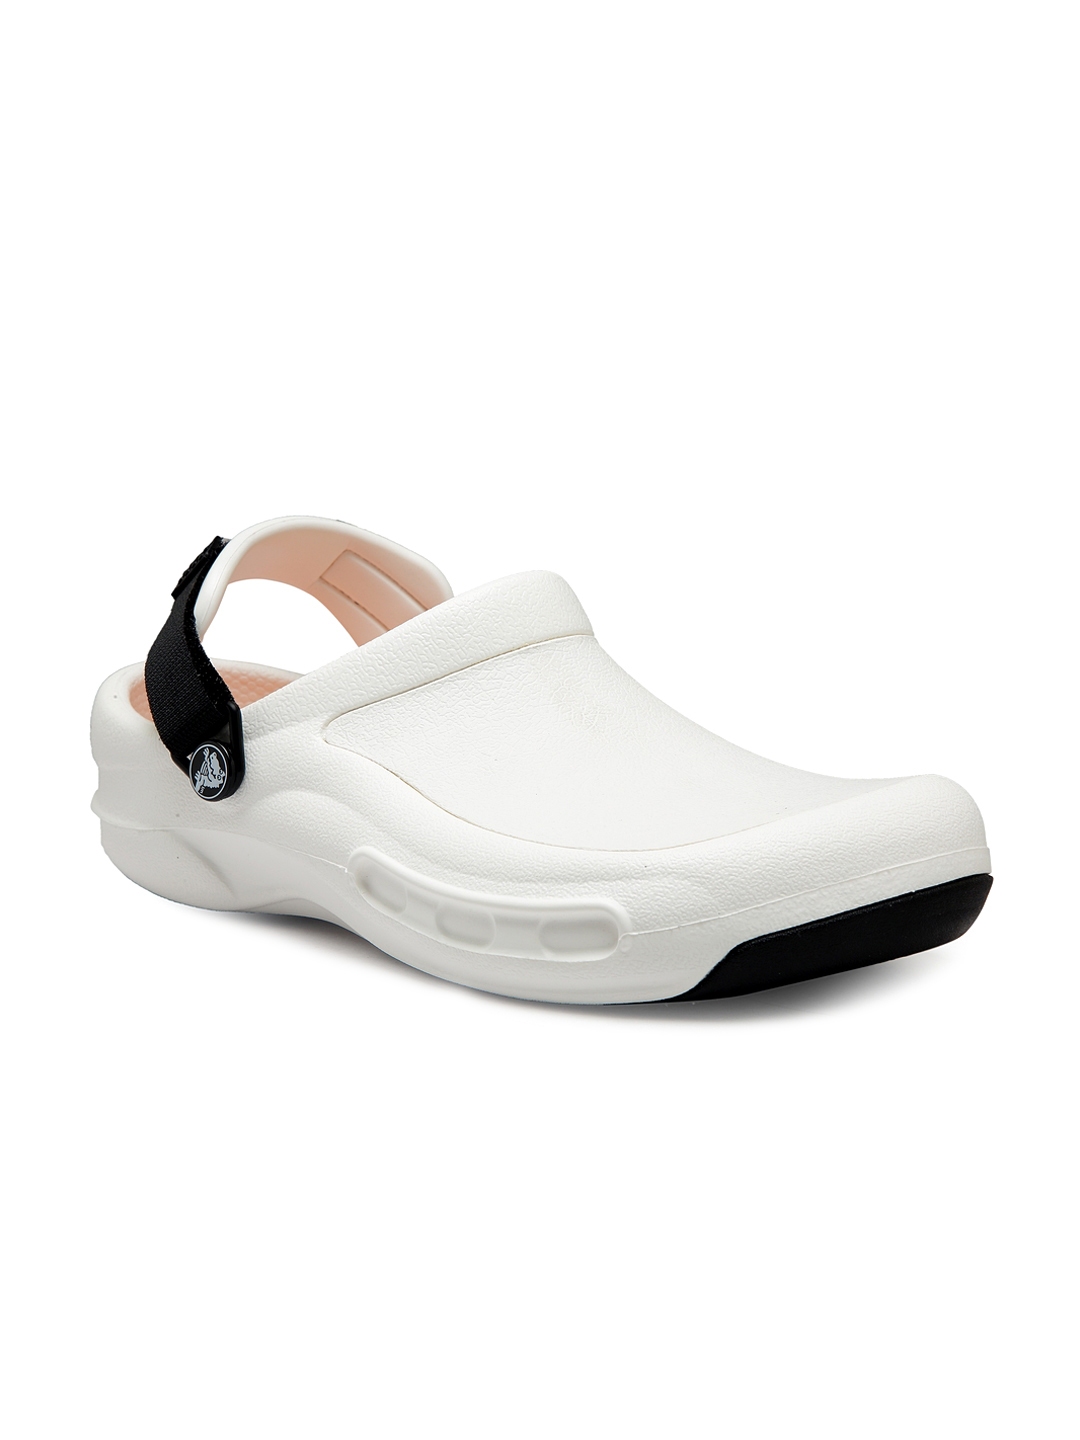 Buy Crocs Men White Clogs - Sandals for 